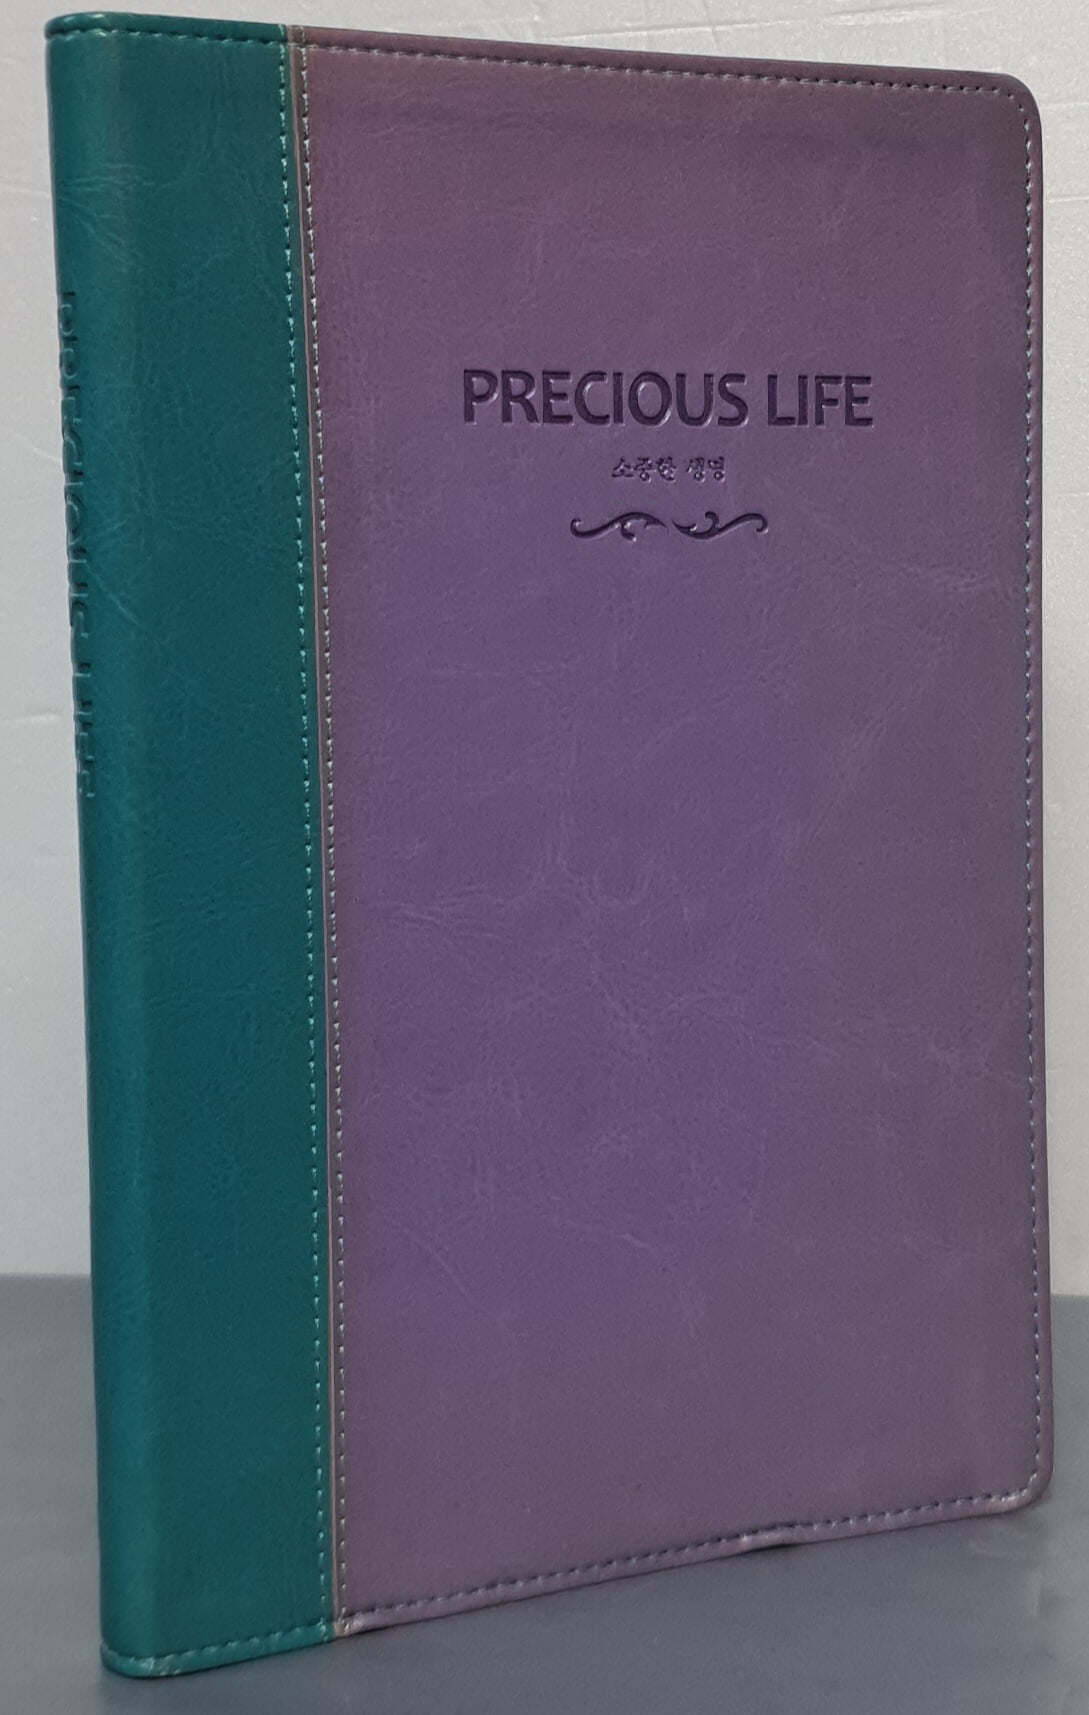 PRECIOUS LIFE 소중한 생명 - 자가진단 50개 항목과 그에 따른 처방